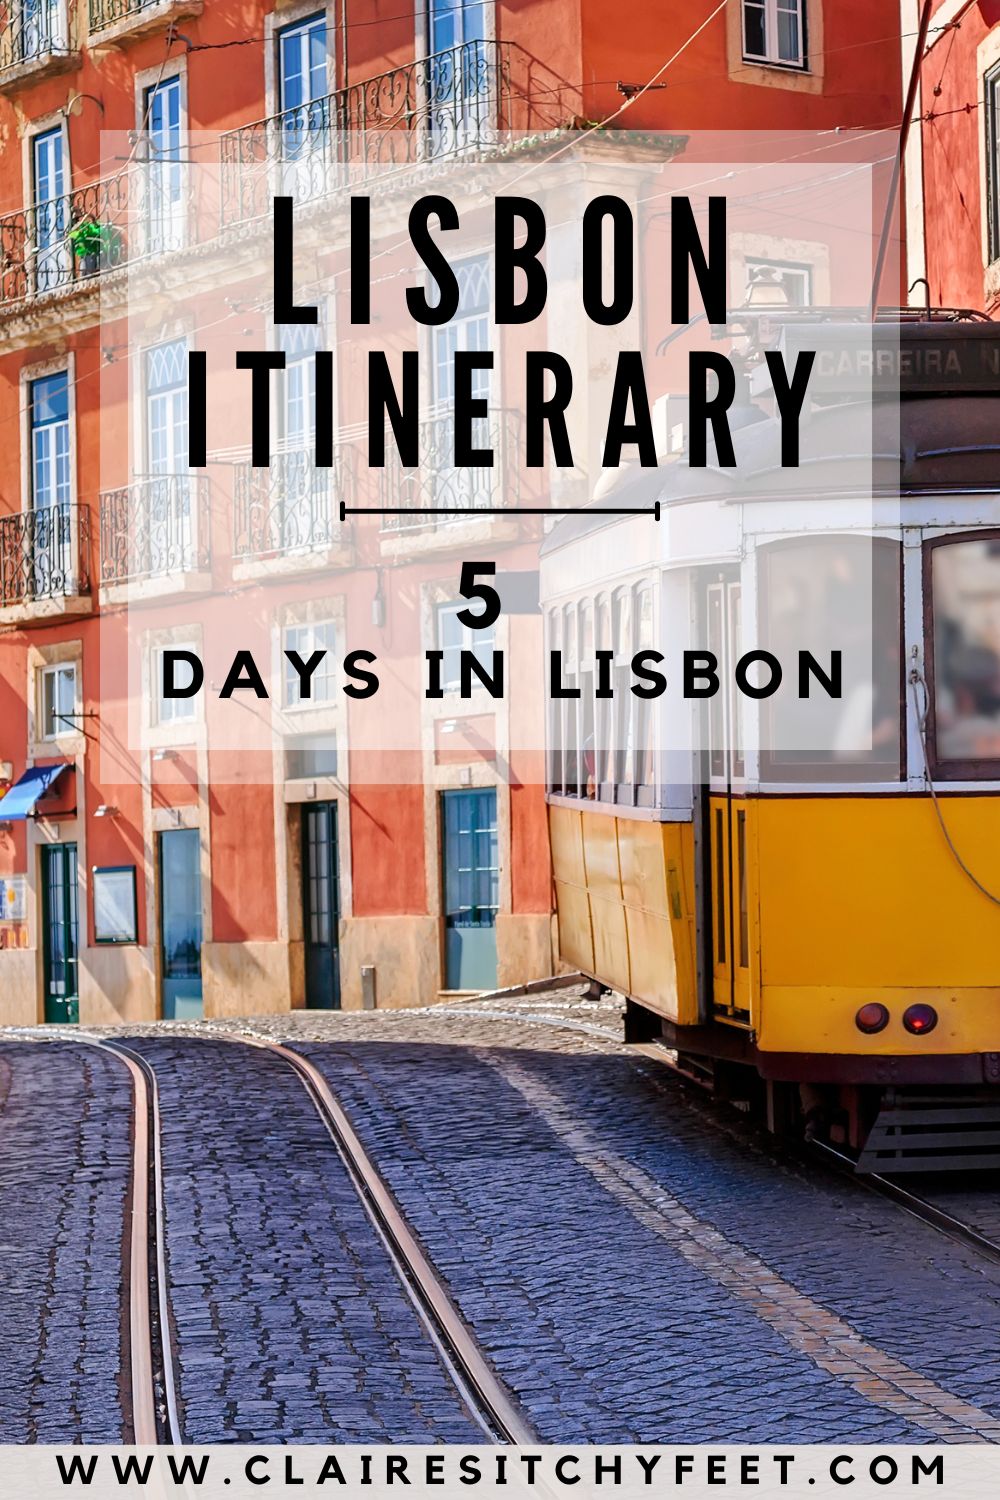 Lisbon Itinerary 5 Days,lisbon,lisbon itinerary,lisbon travel